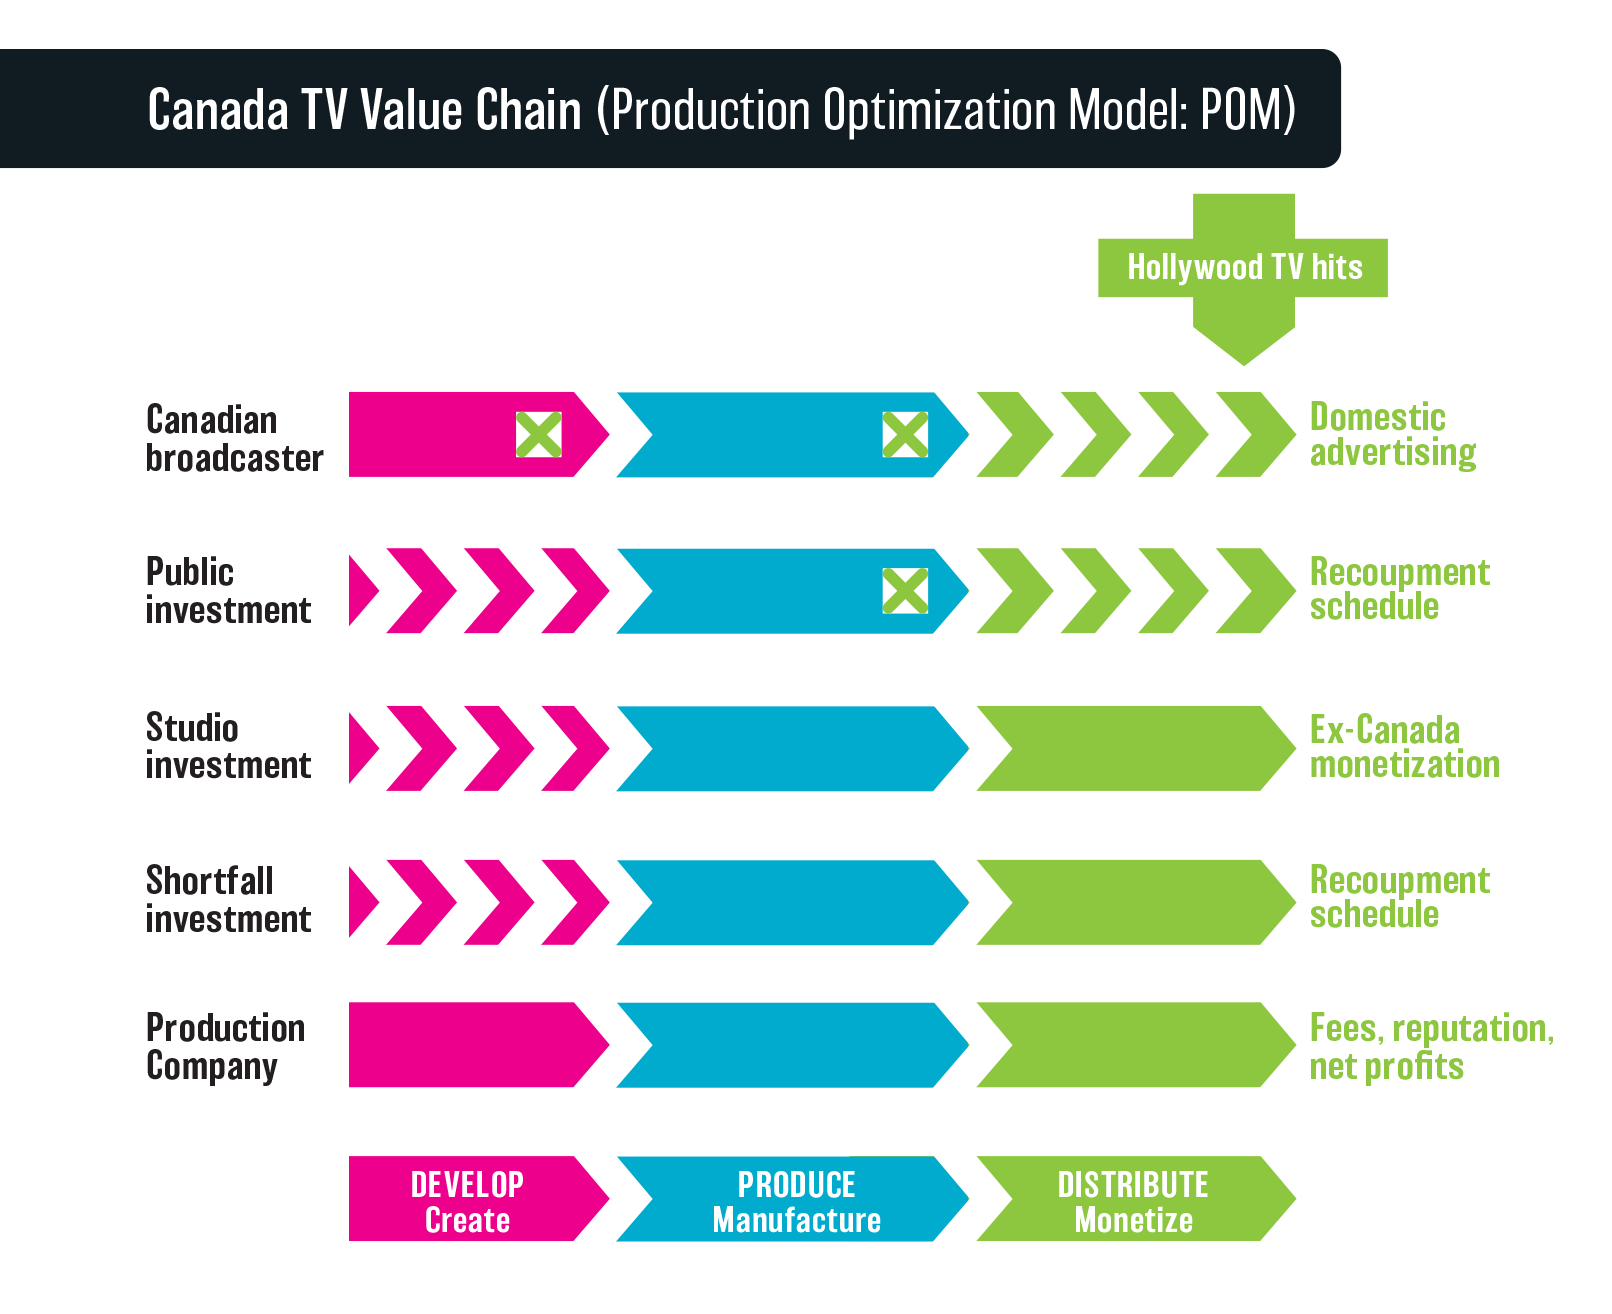 Figure 3.4: Canada TV Value Chain (Production Optimization Model: POM)